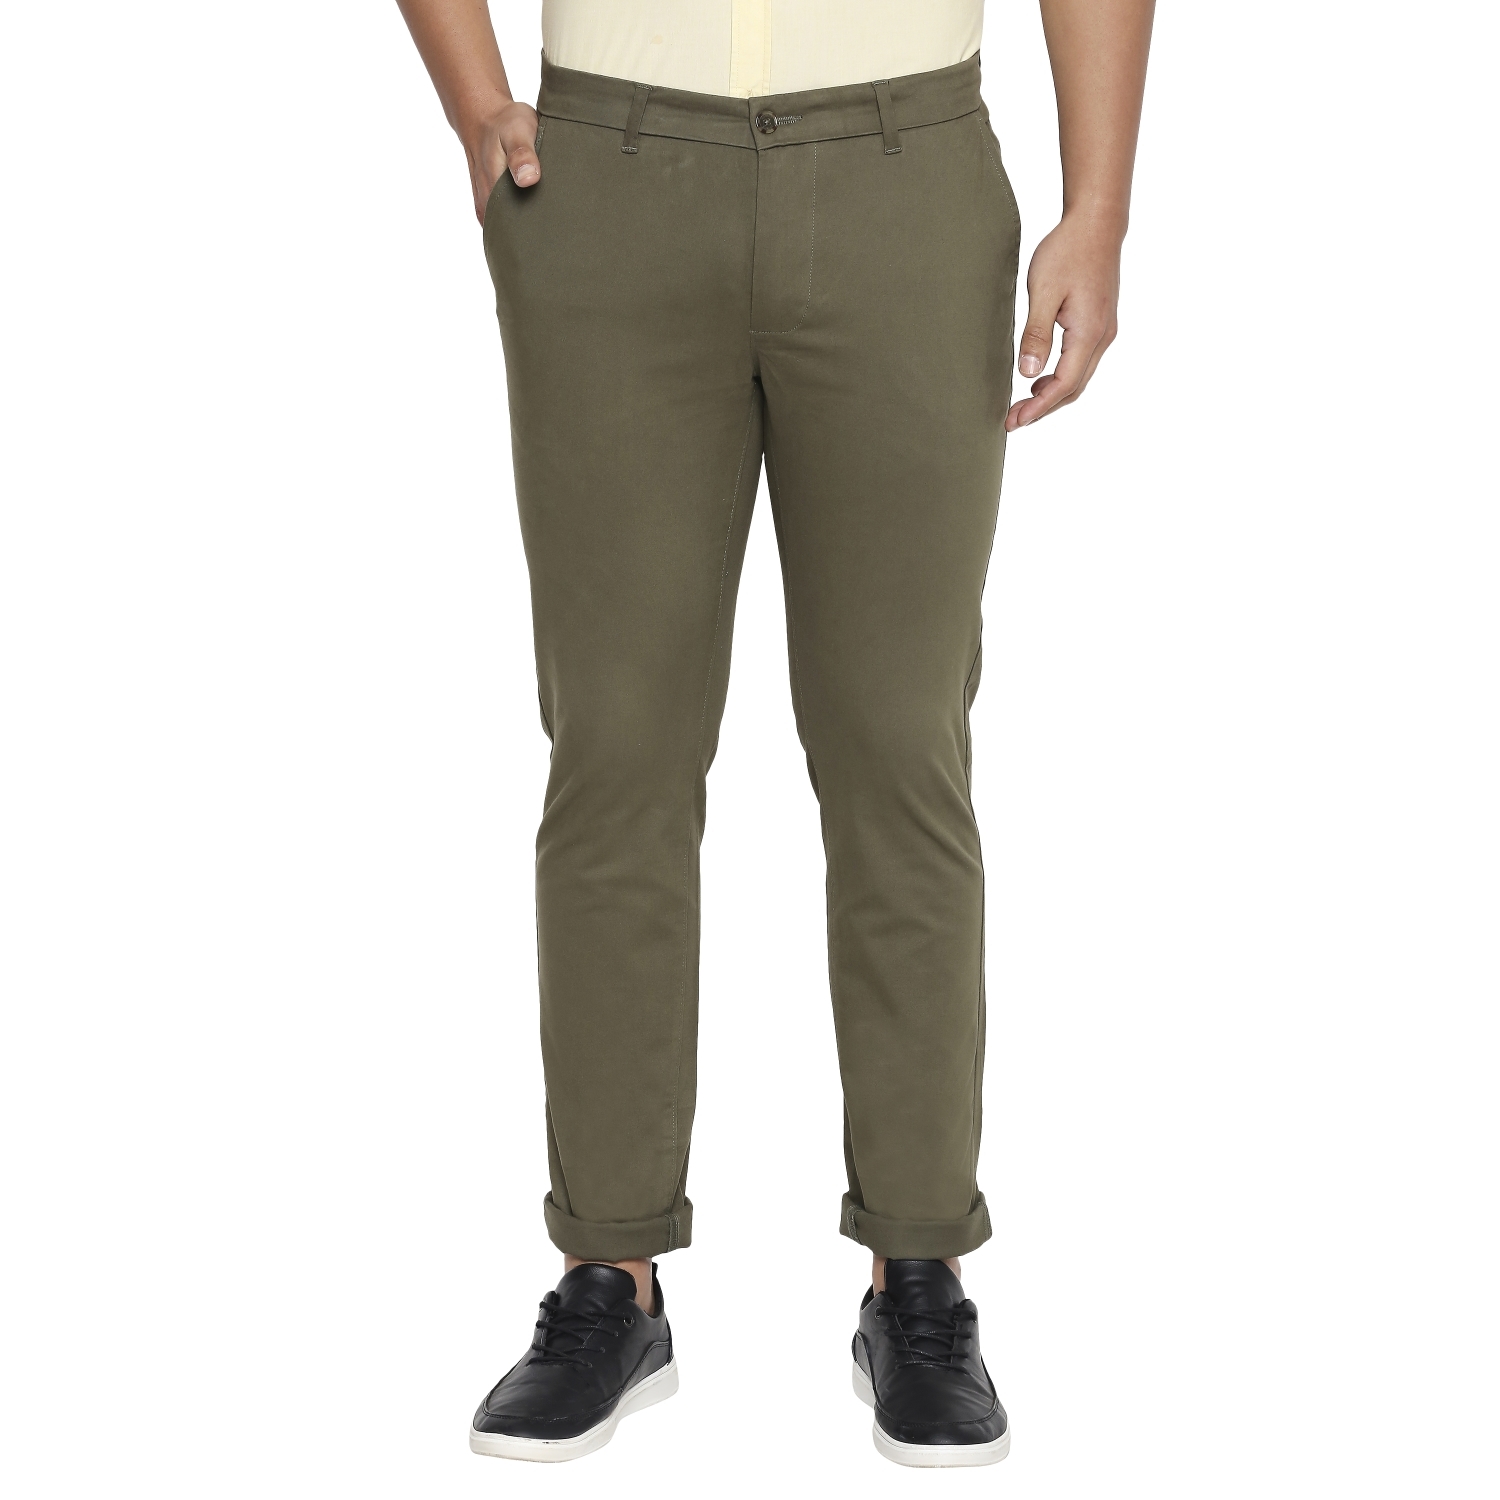 Basics | Basics Tapered Fit Leaf Olive Stretch Trouser